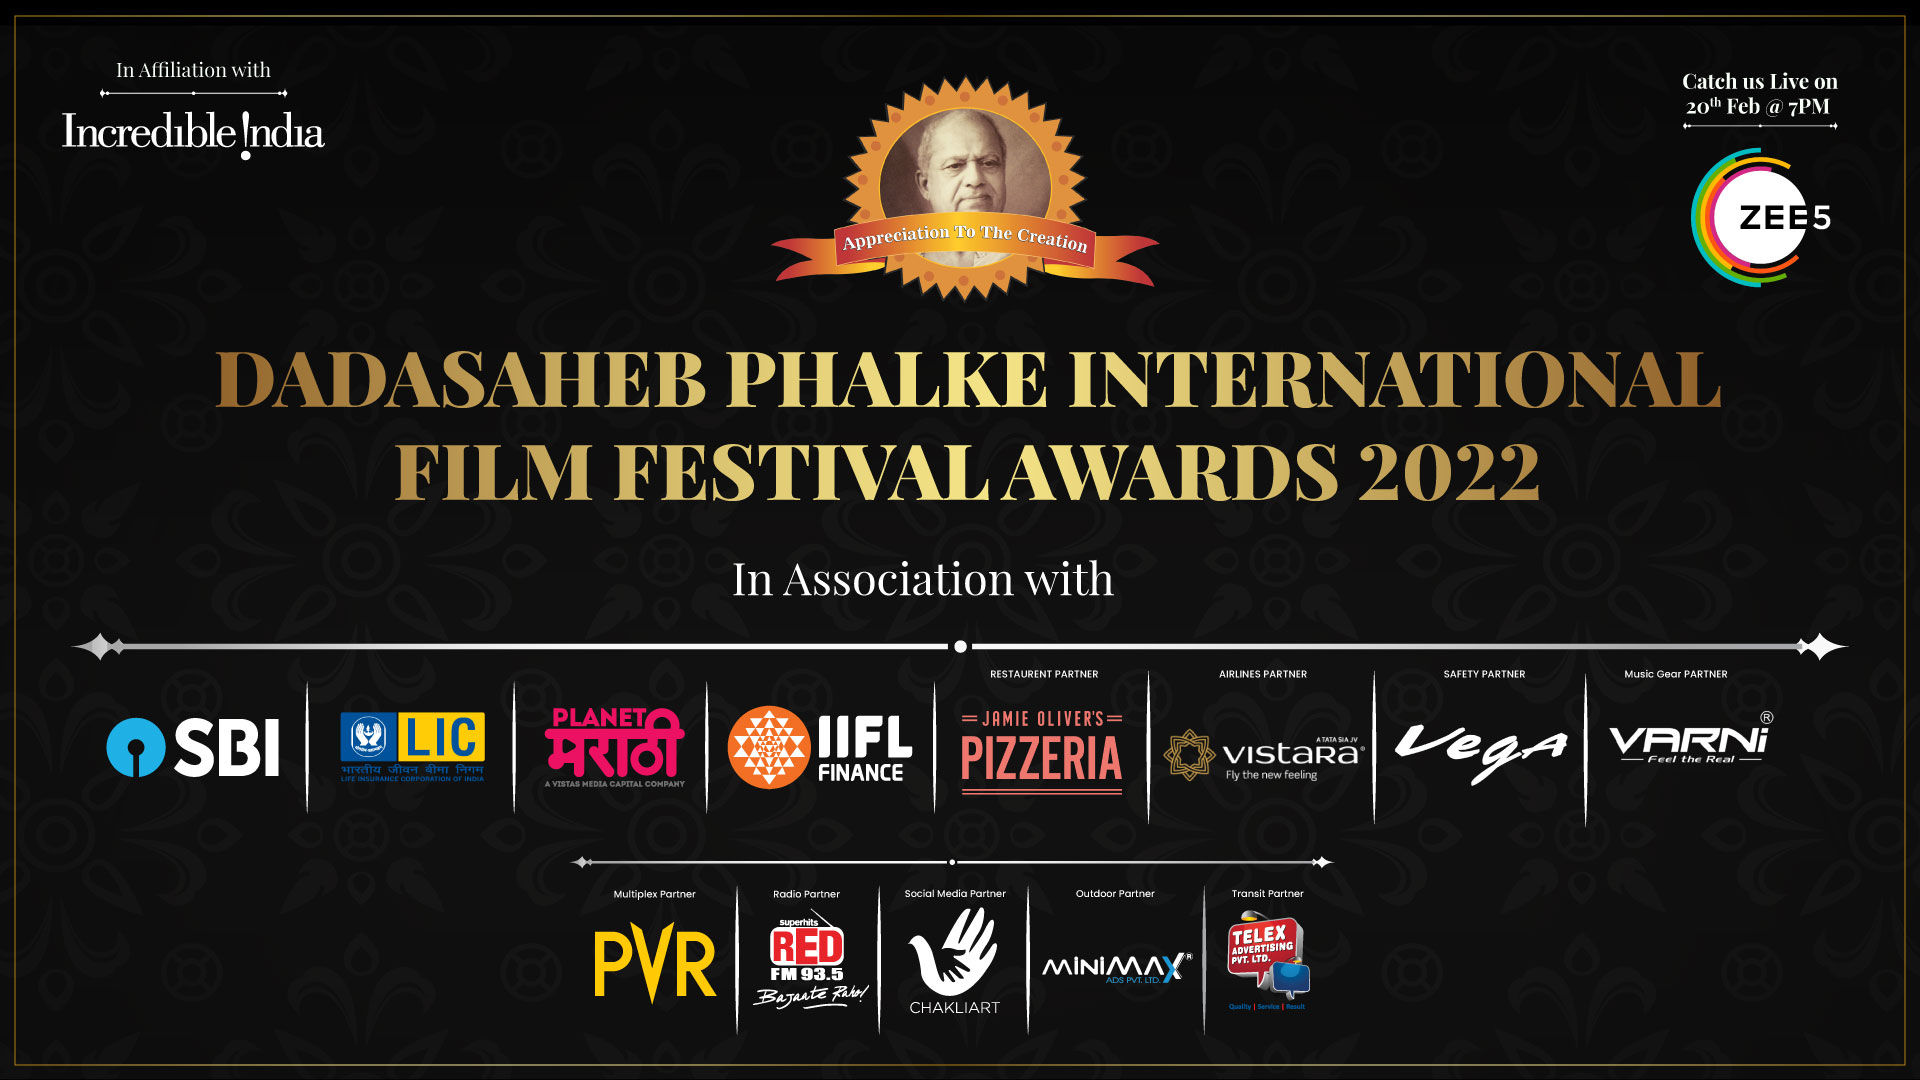 Official announcement of Associate Partners for Dadasaheb Phalke International Film Festival Awards 2022 